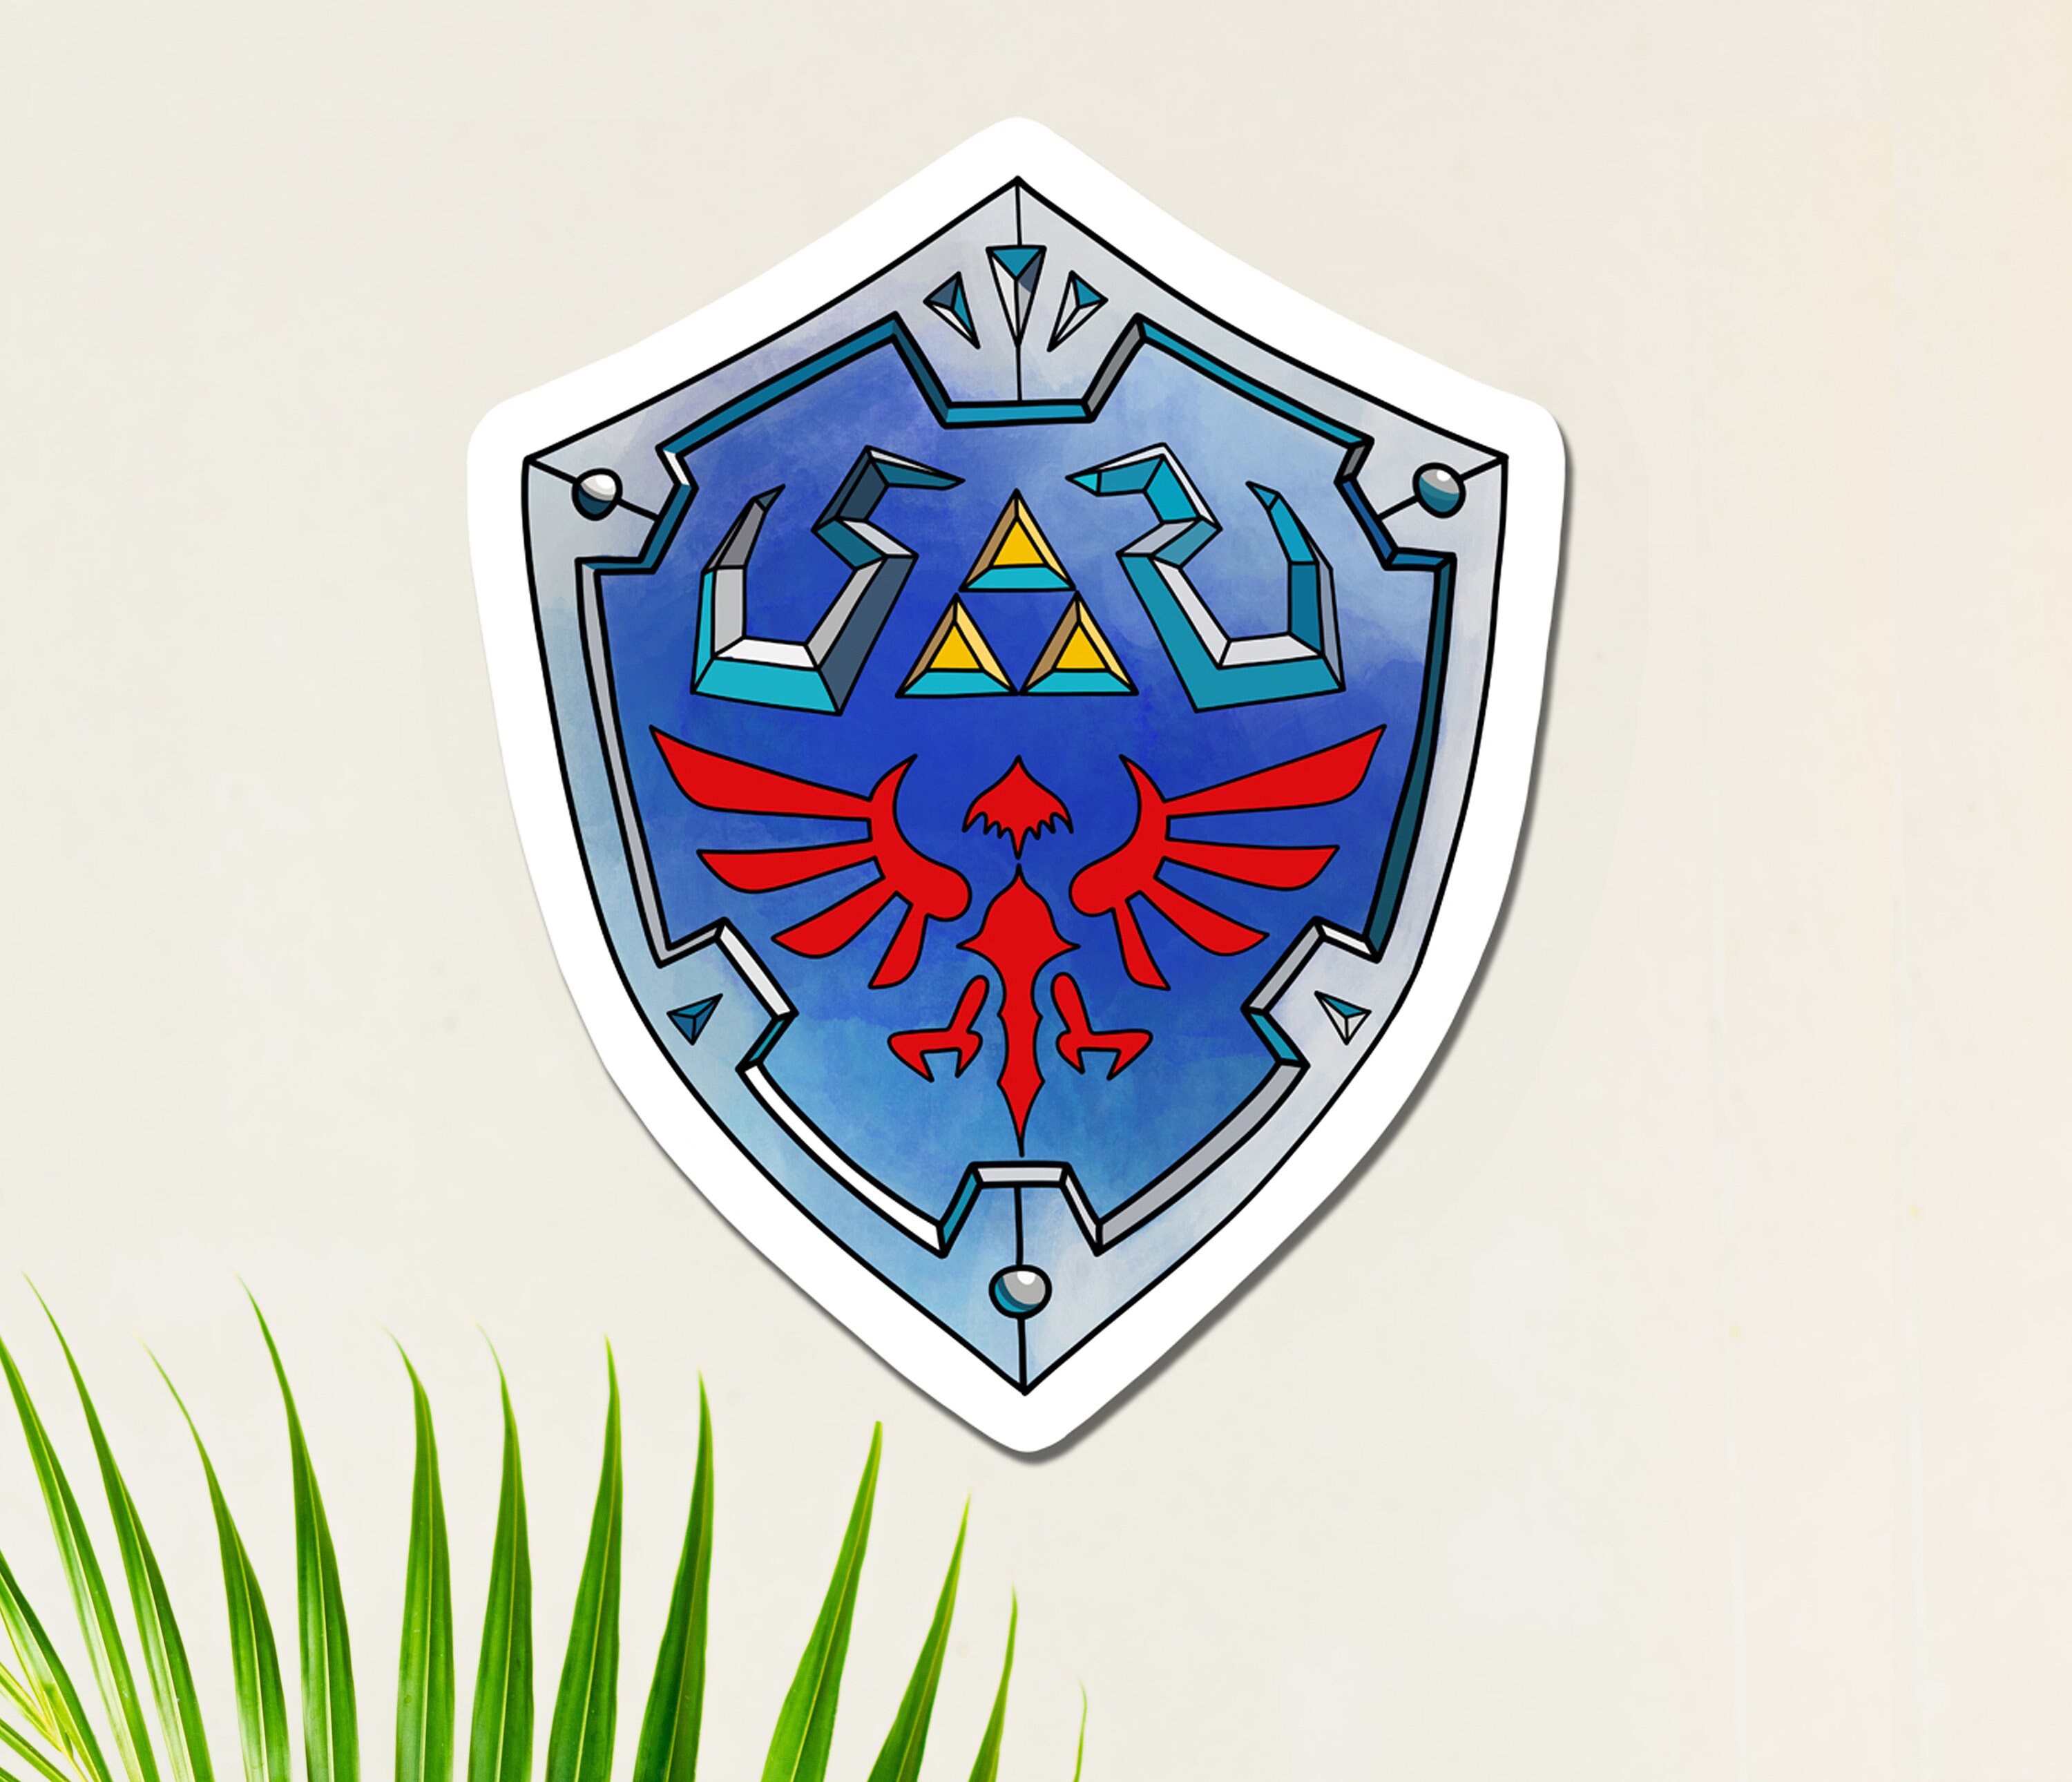 Legend of Zelda: Link Sticker Breath of the Wild Zelda Sticker Master Sword  Water Resistant Bottle Hyrule Warriors 